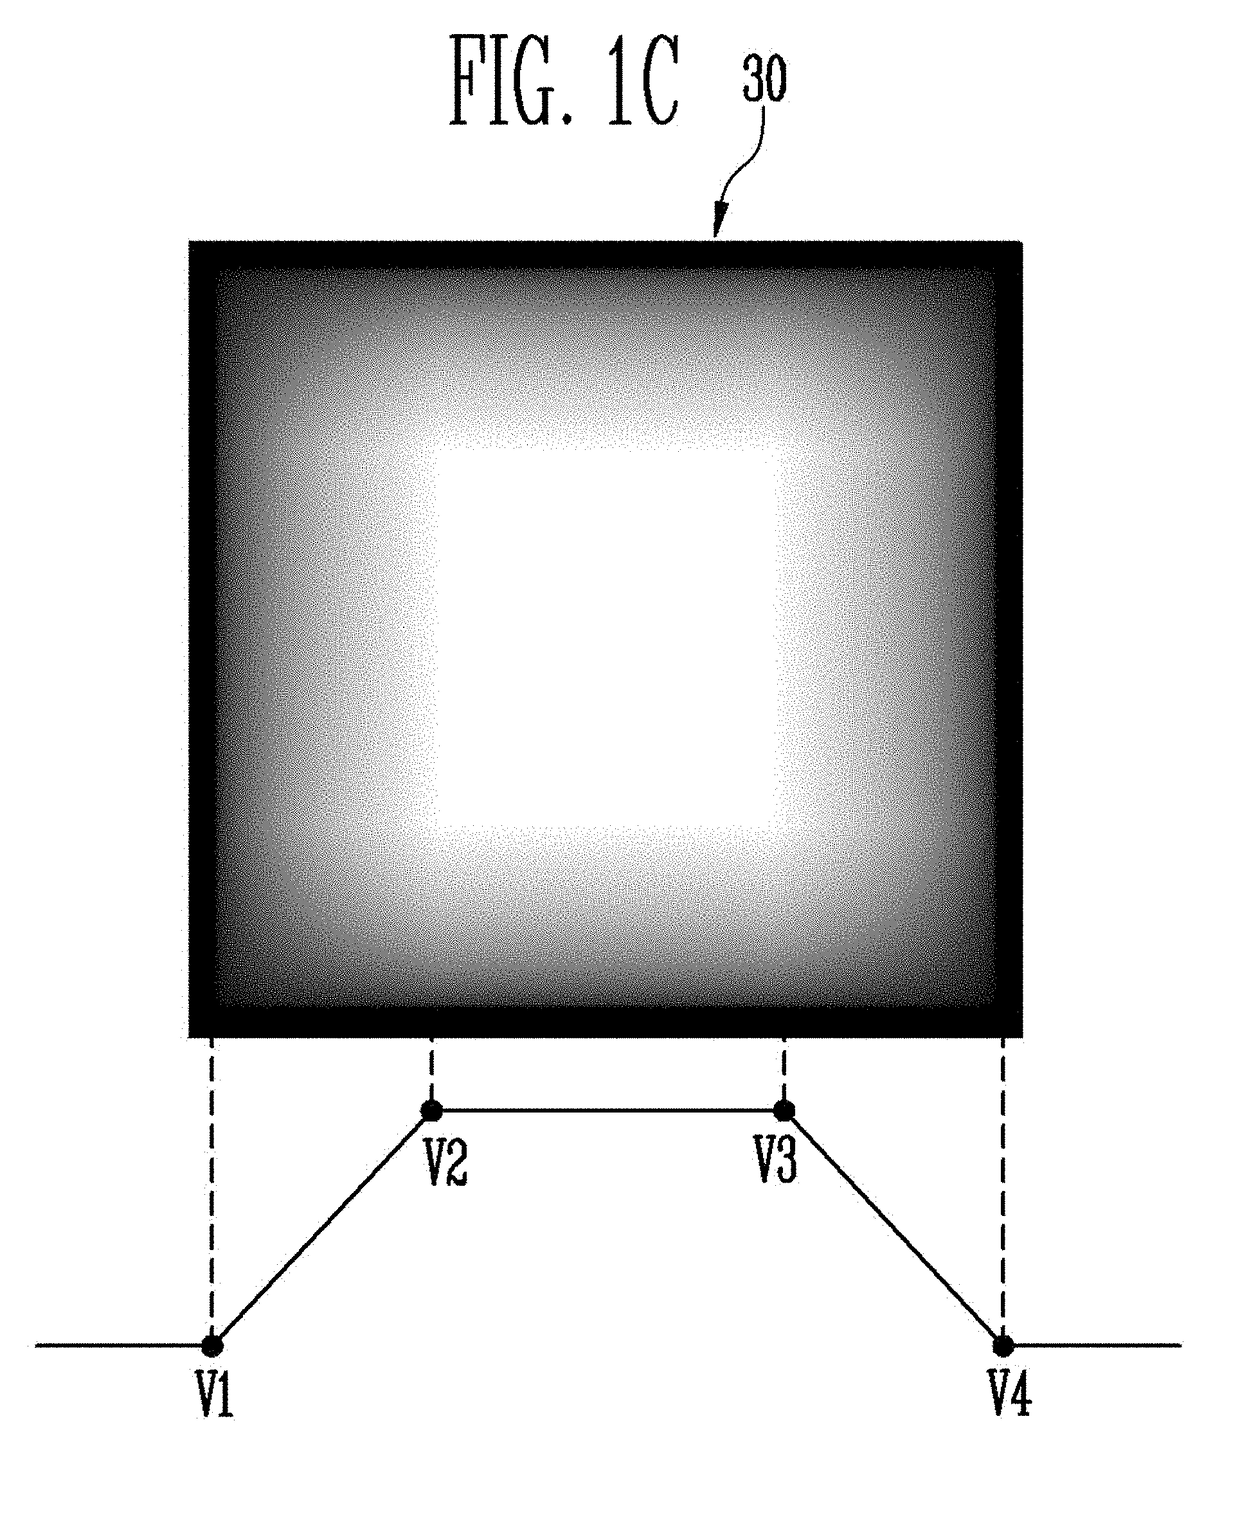 Display device and method for displaying an image thereon